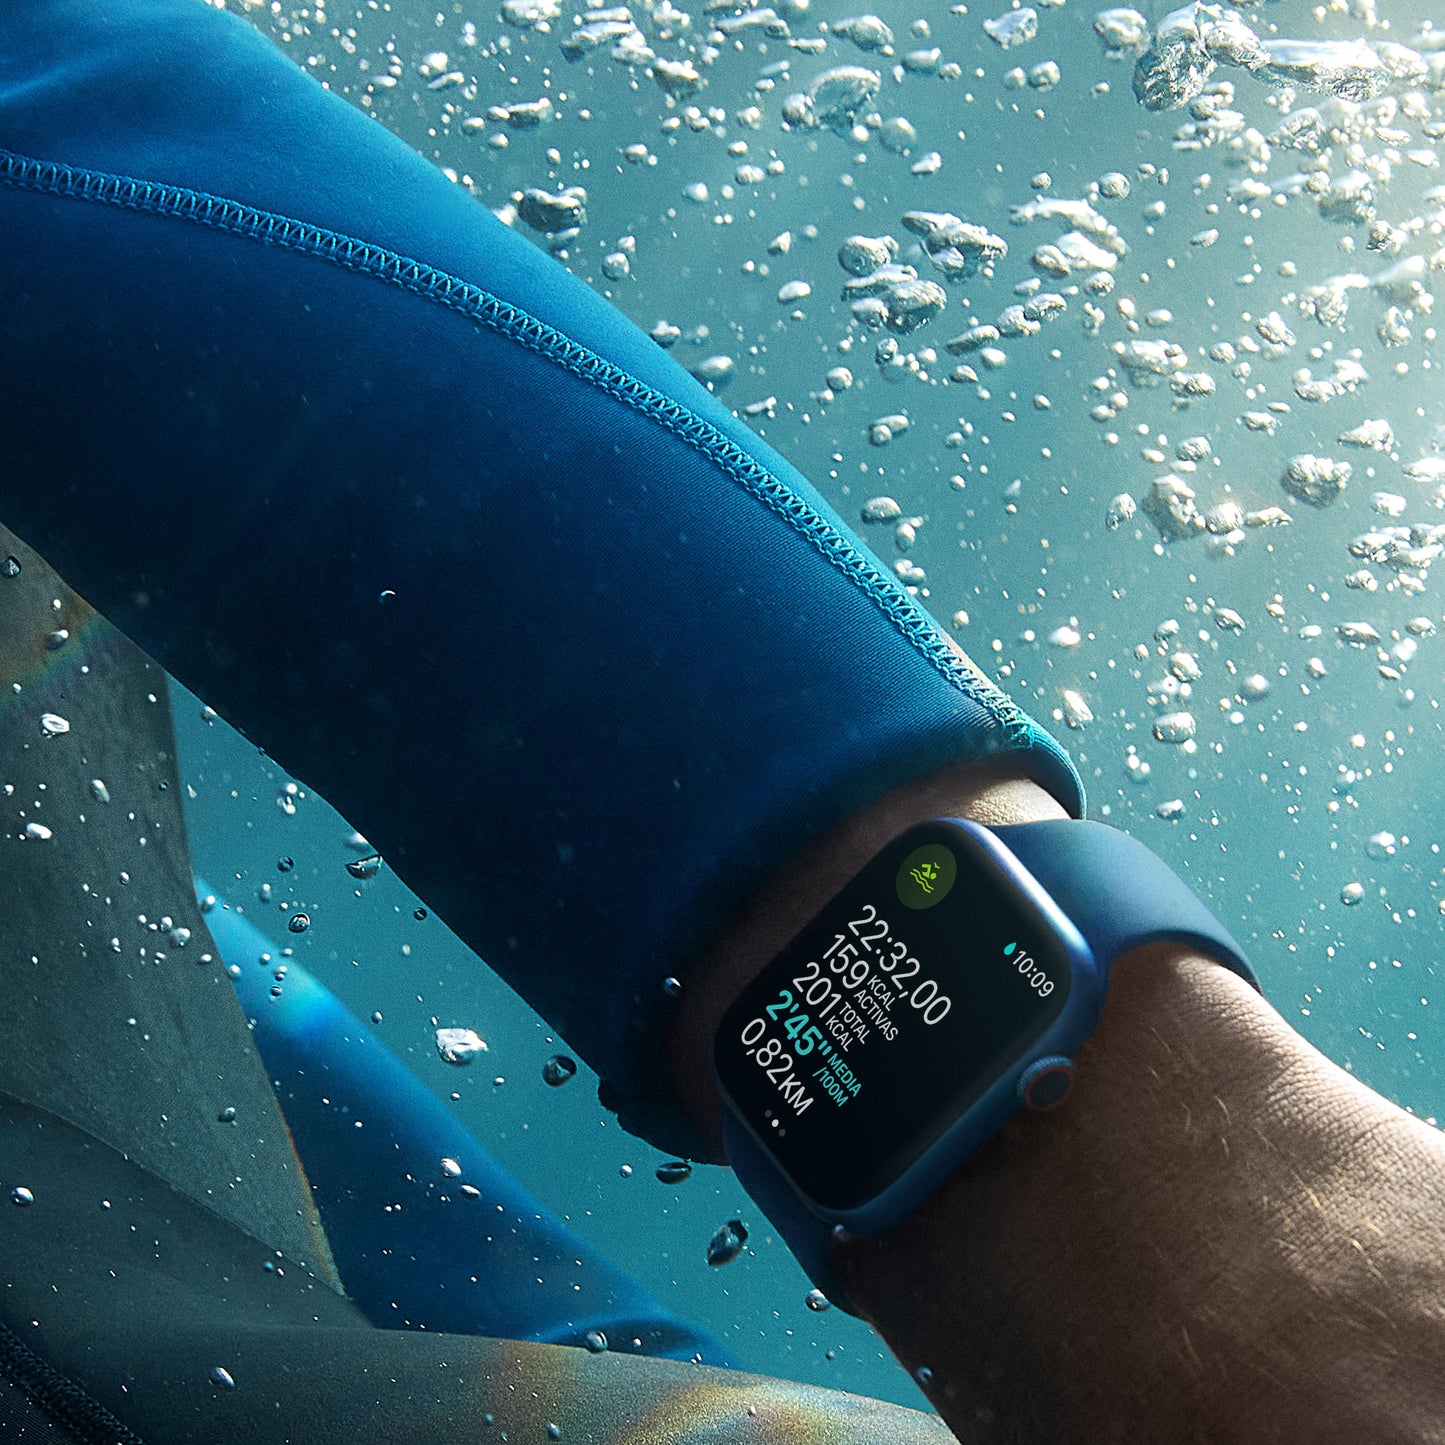 Apple Watch Nike Series 7 (GPS + Cellular) - Caja de aluminio en color medianoche de 41 mm - Correa Nike Sport antracita/negro - Talla única